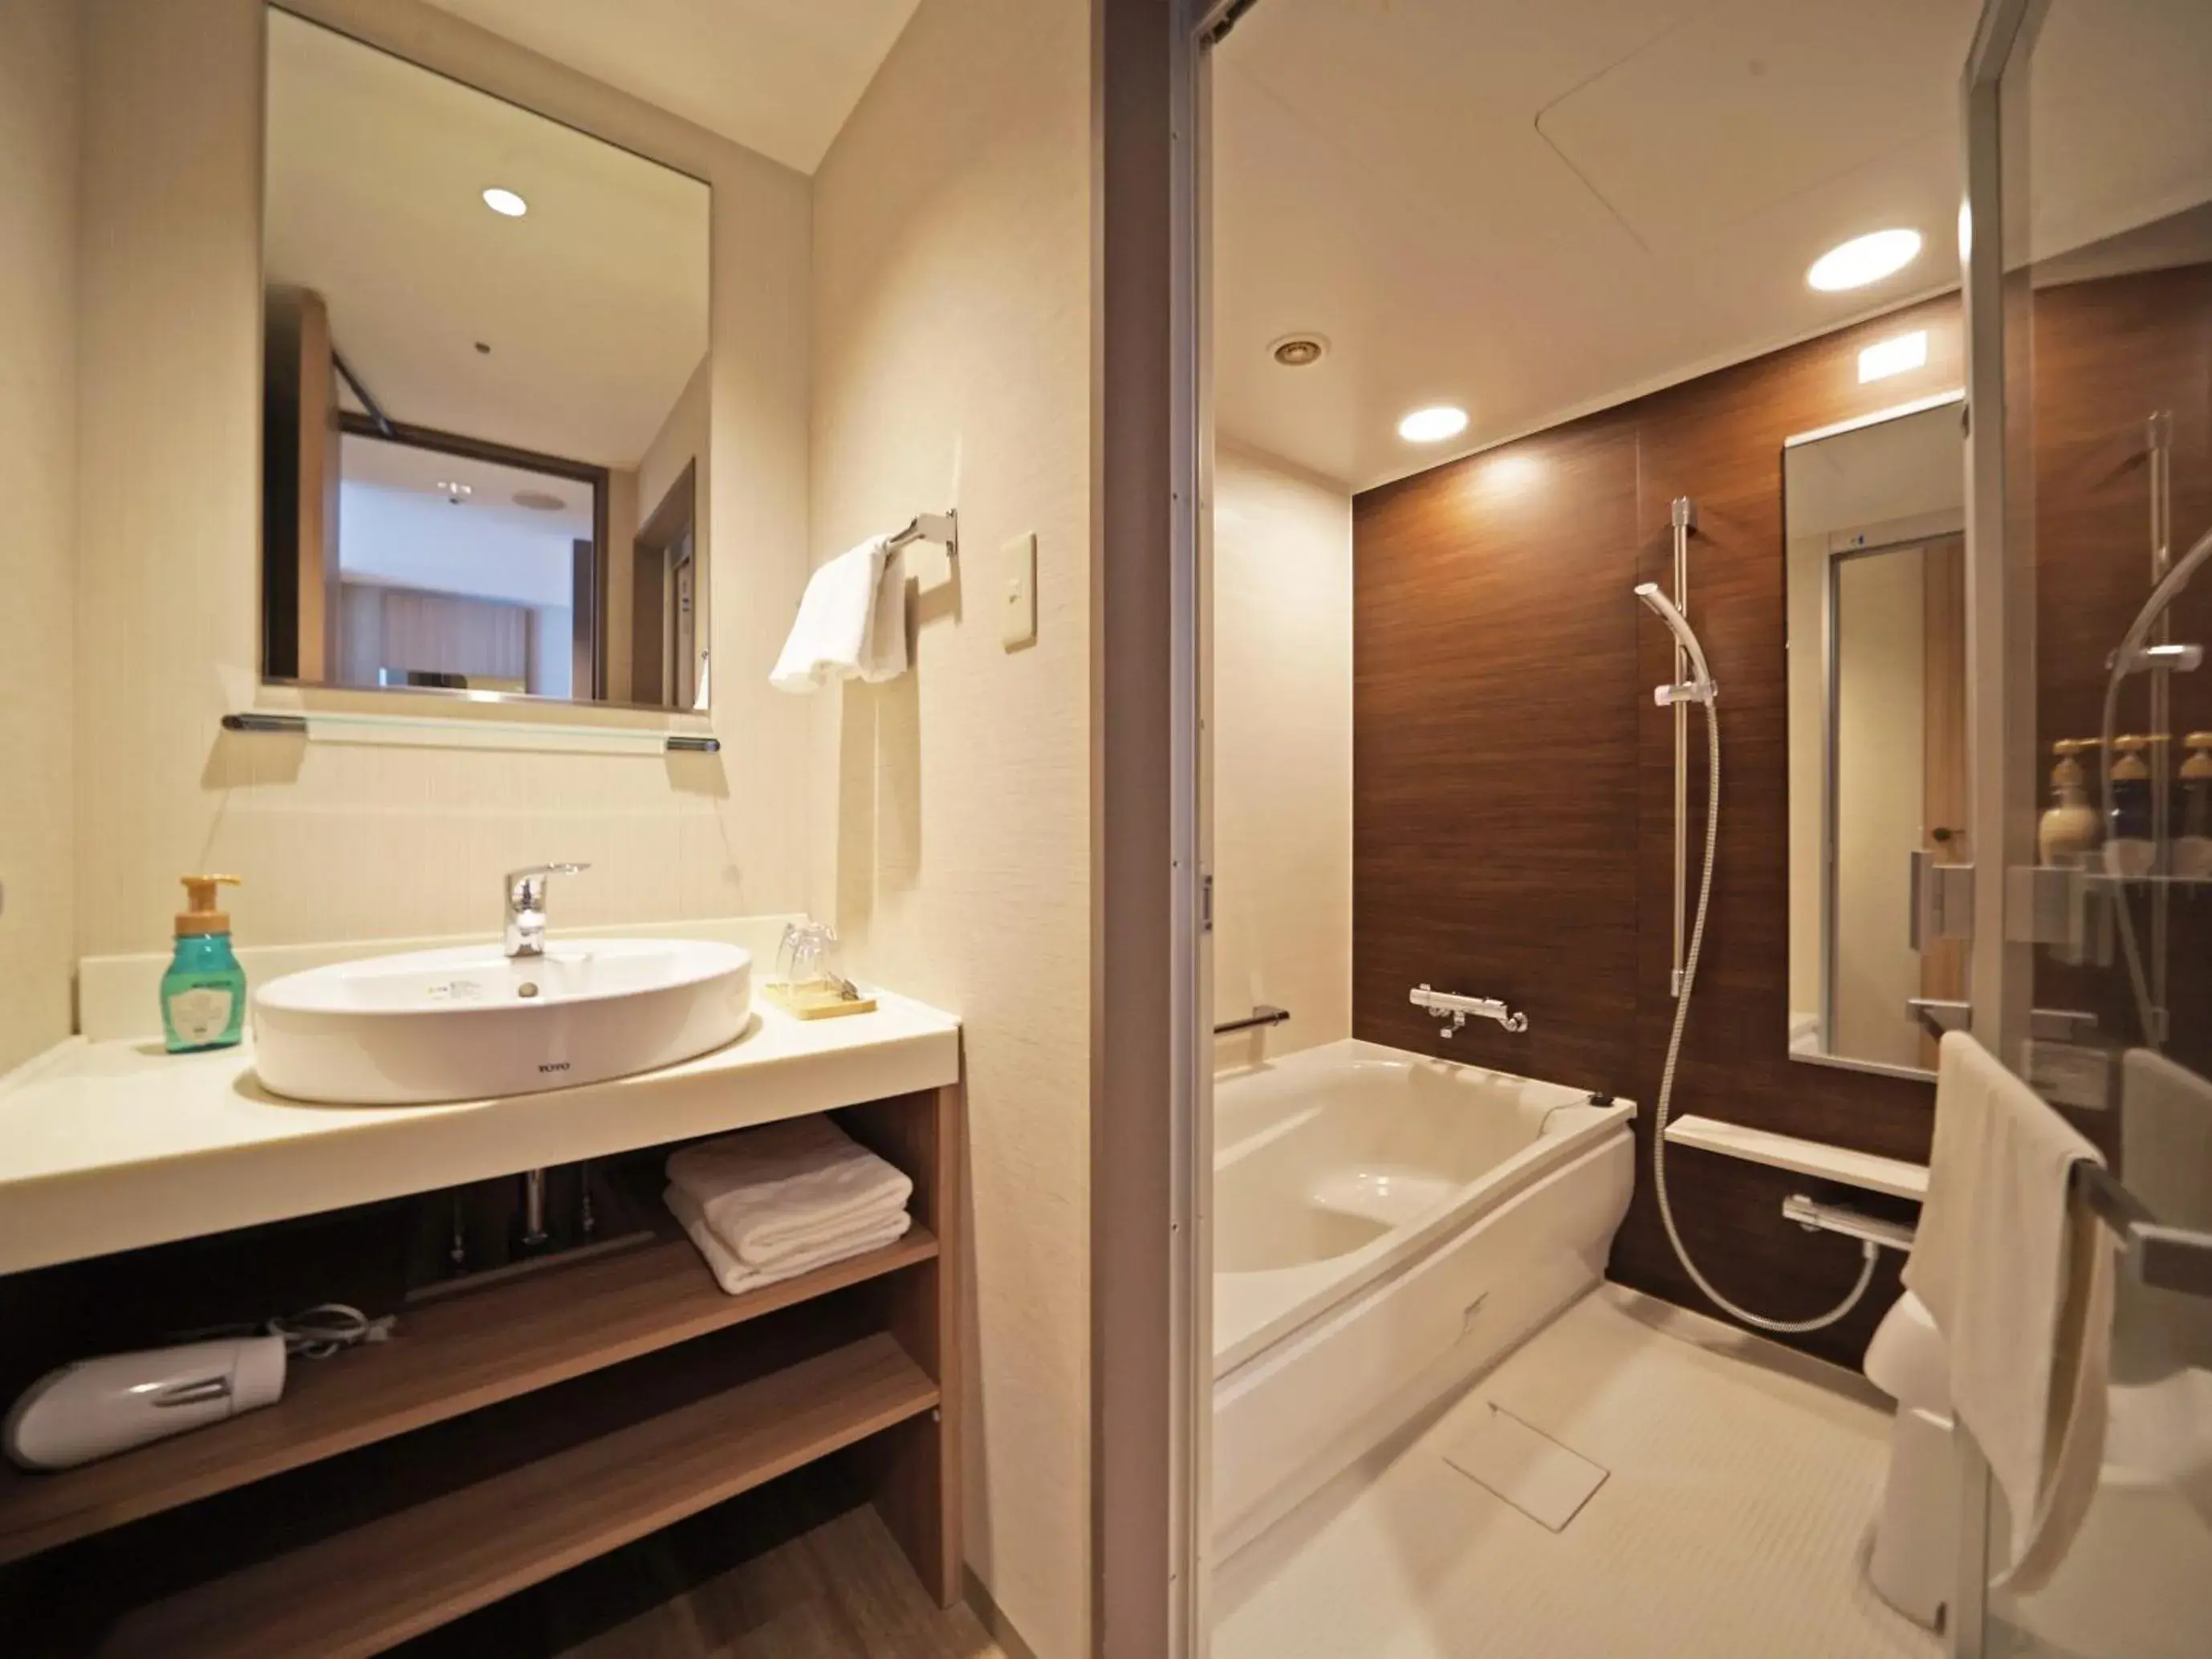 Bathroom in the square hotel Yokohama Minatomirai